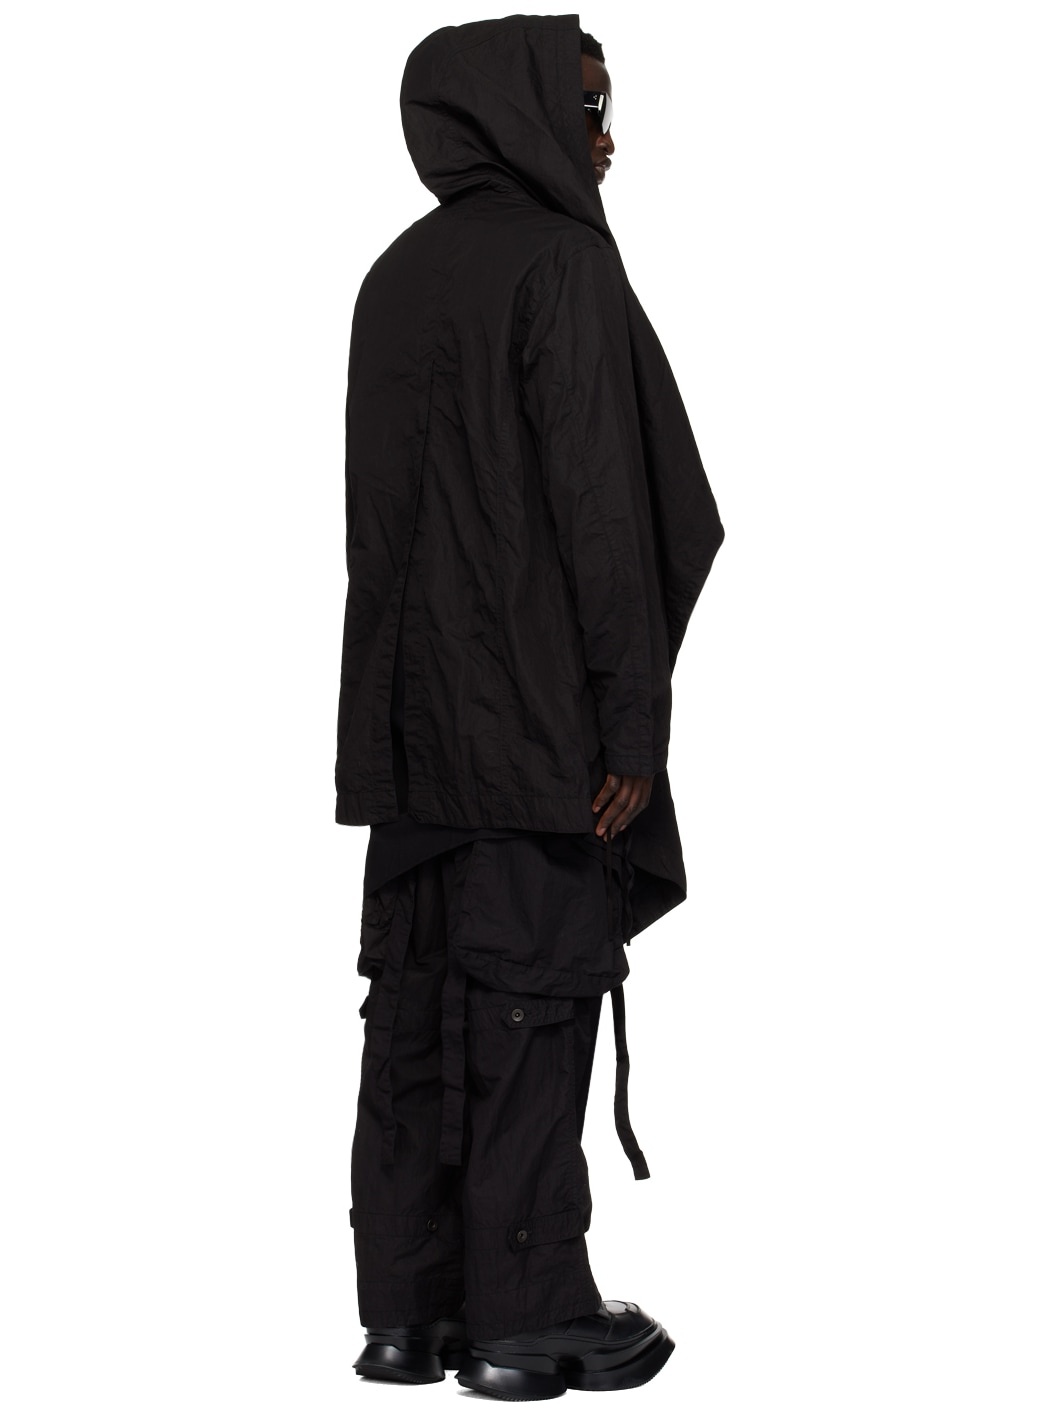 Black Hooded Coat - 3